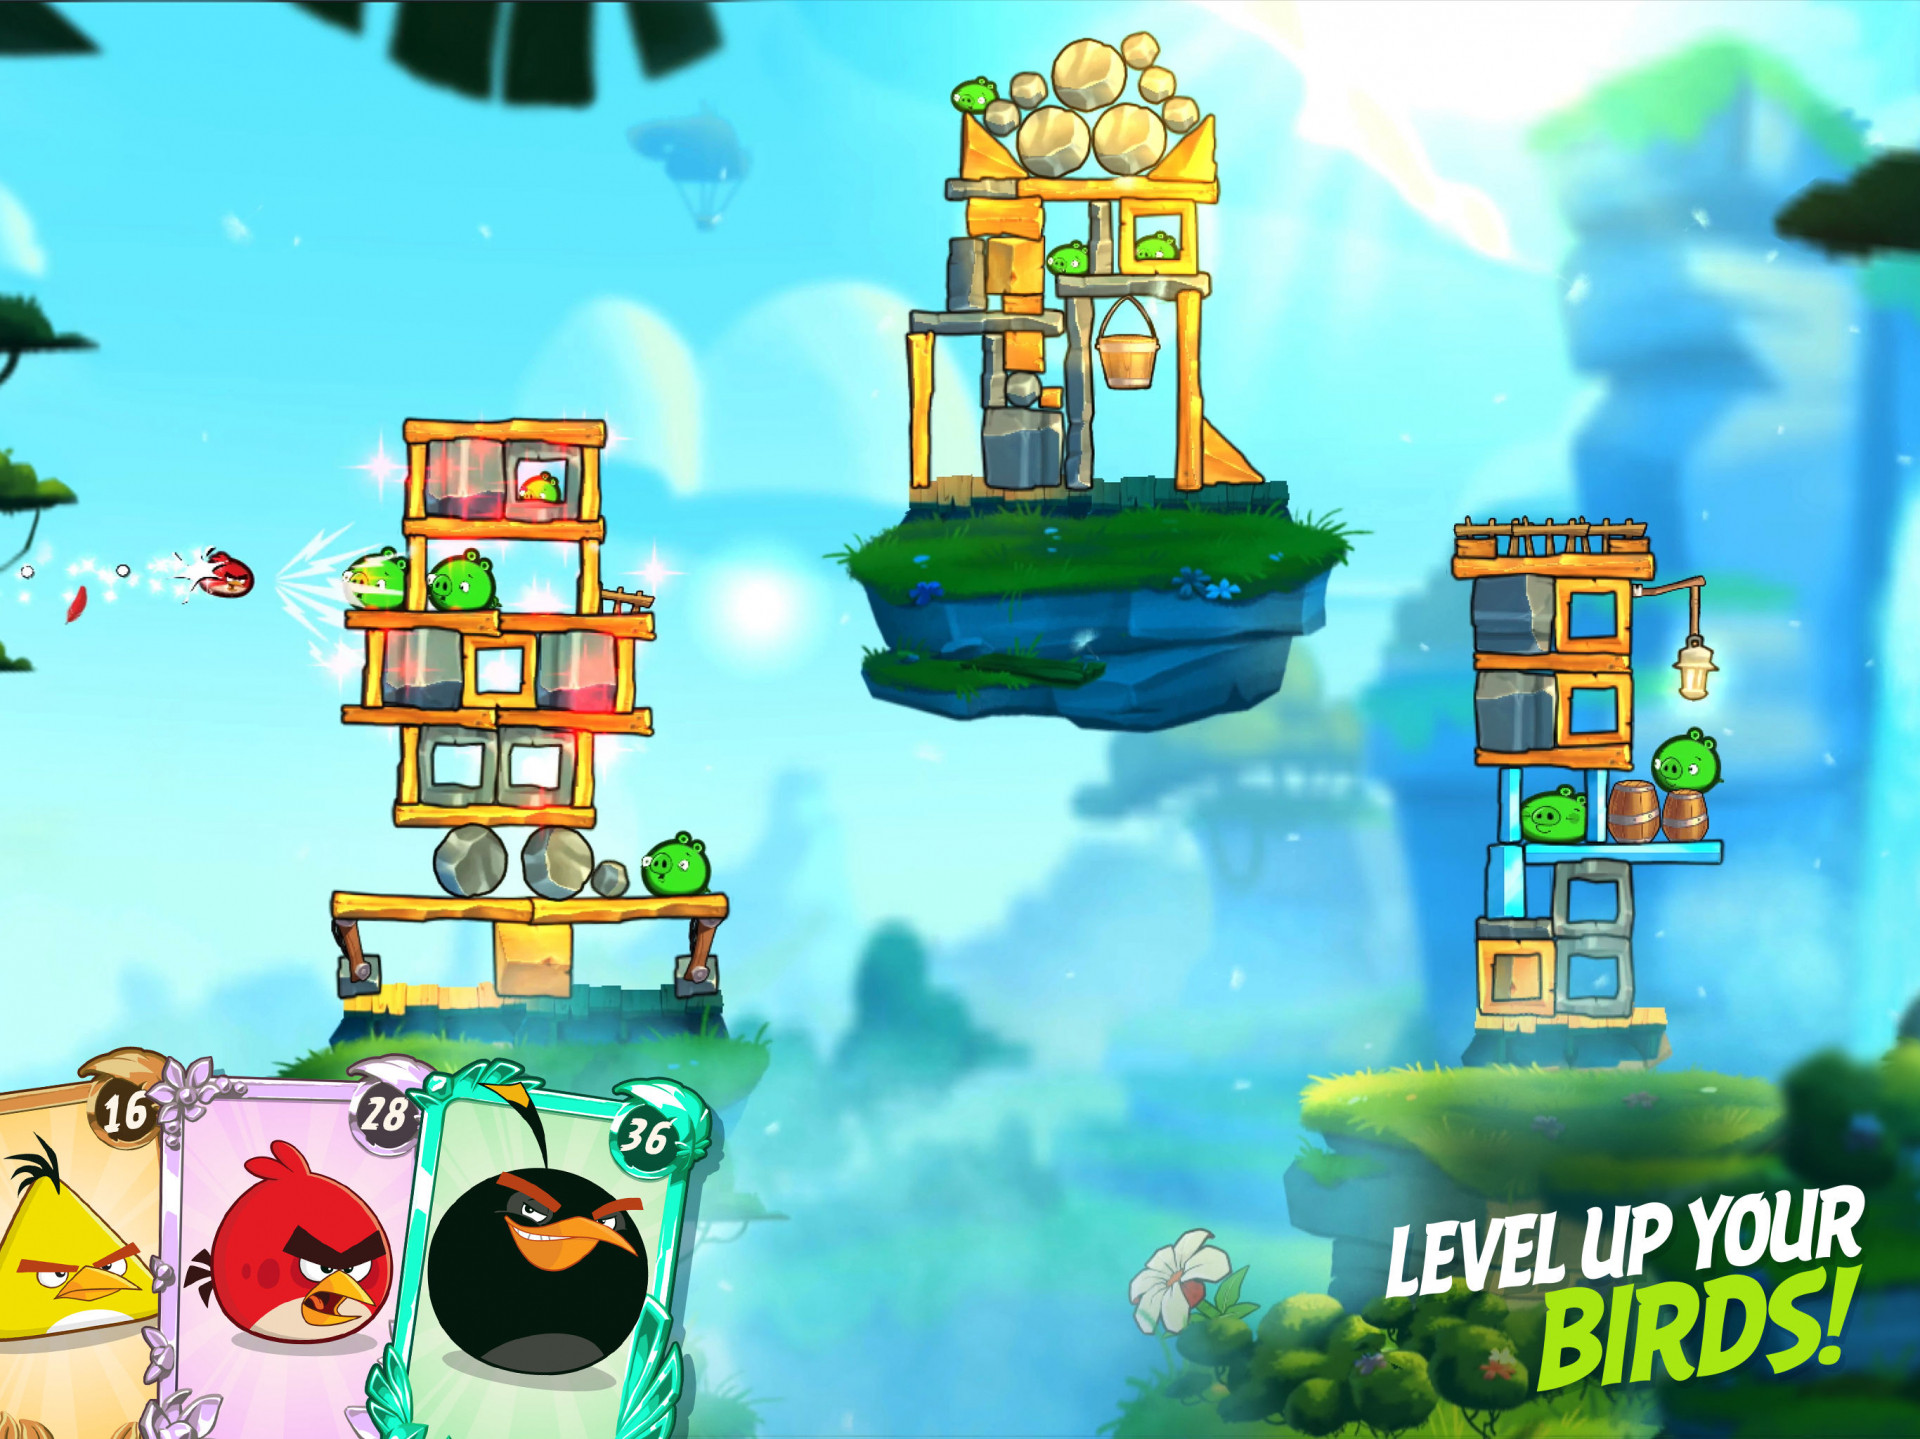 Игра птичка бердз. Angry Birds 2 игра. Игра Энгри бердз 2 злые птицы. Angry Birds 2 мобильная игра. Angry Birds 2 игра птички.